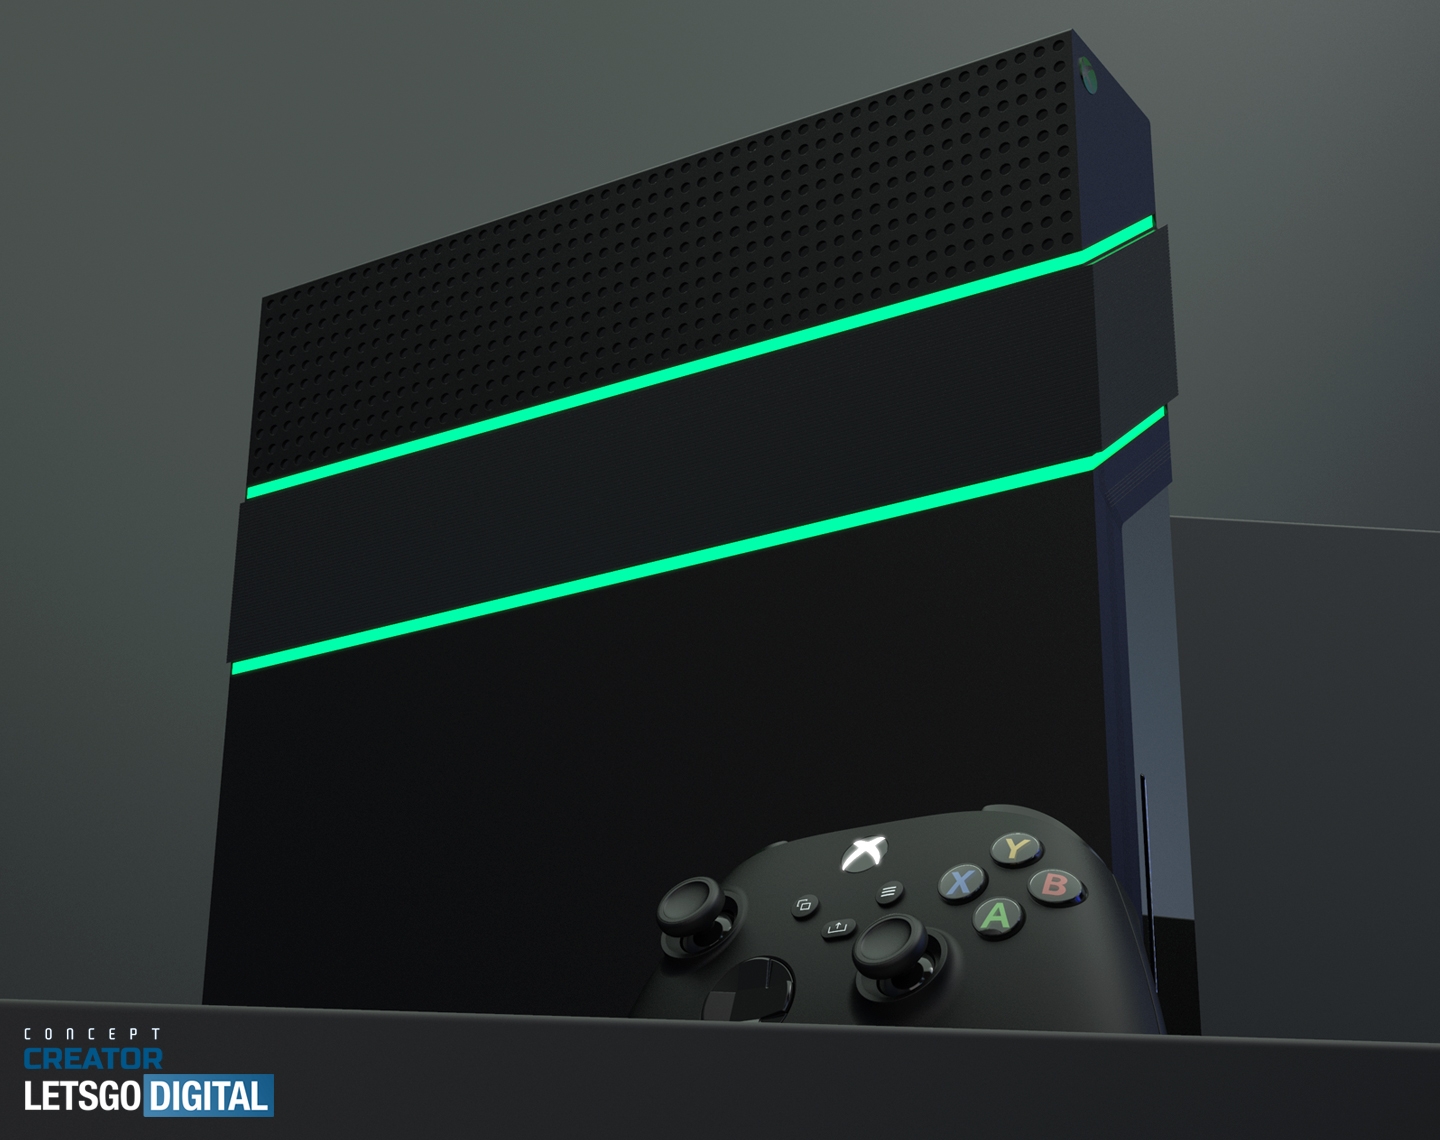 Xbox Series X Elite teased in new renders, beefier console in 2023